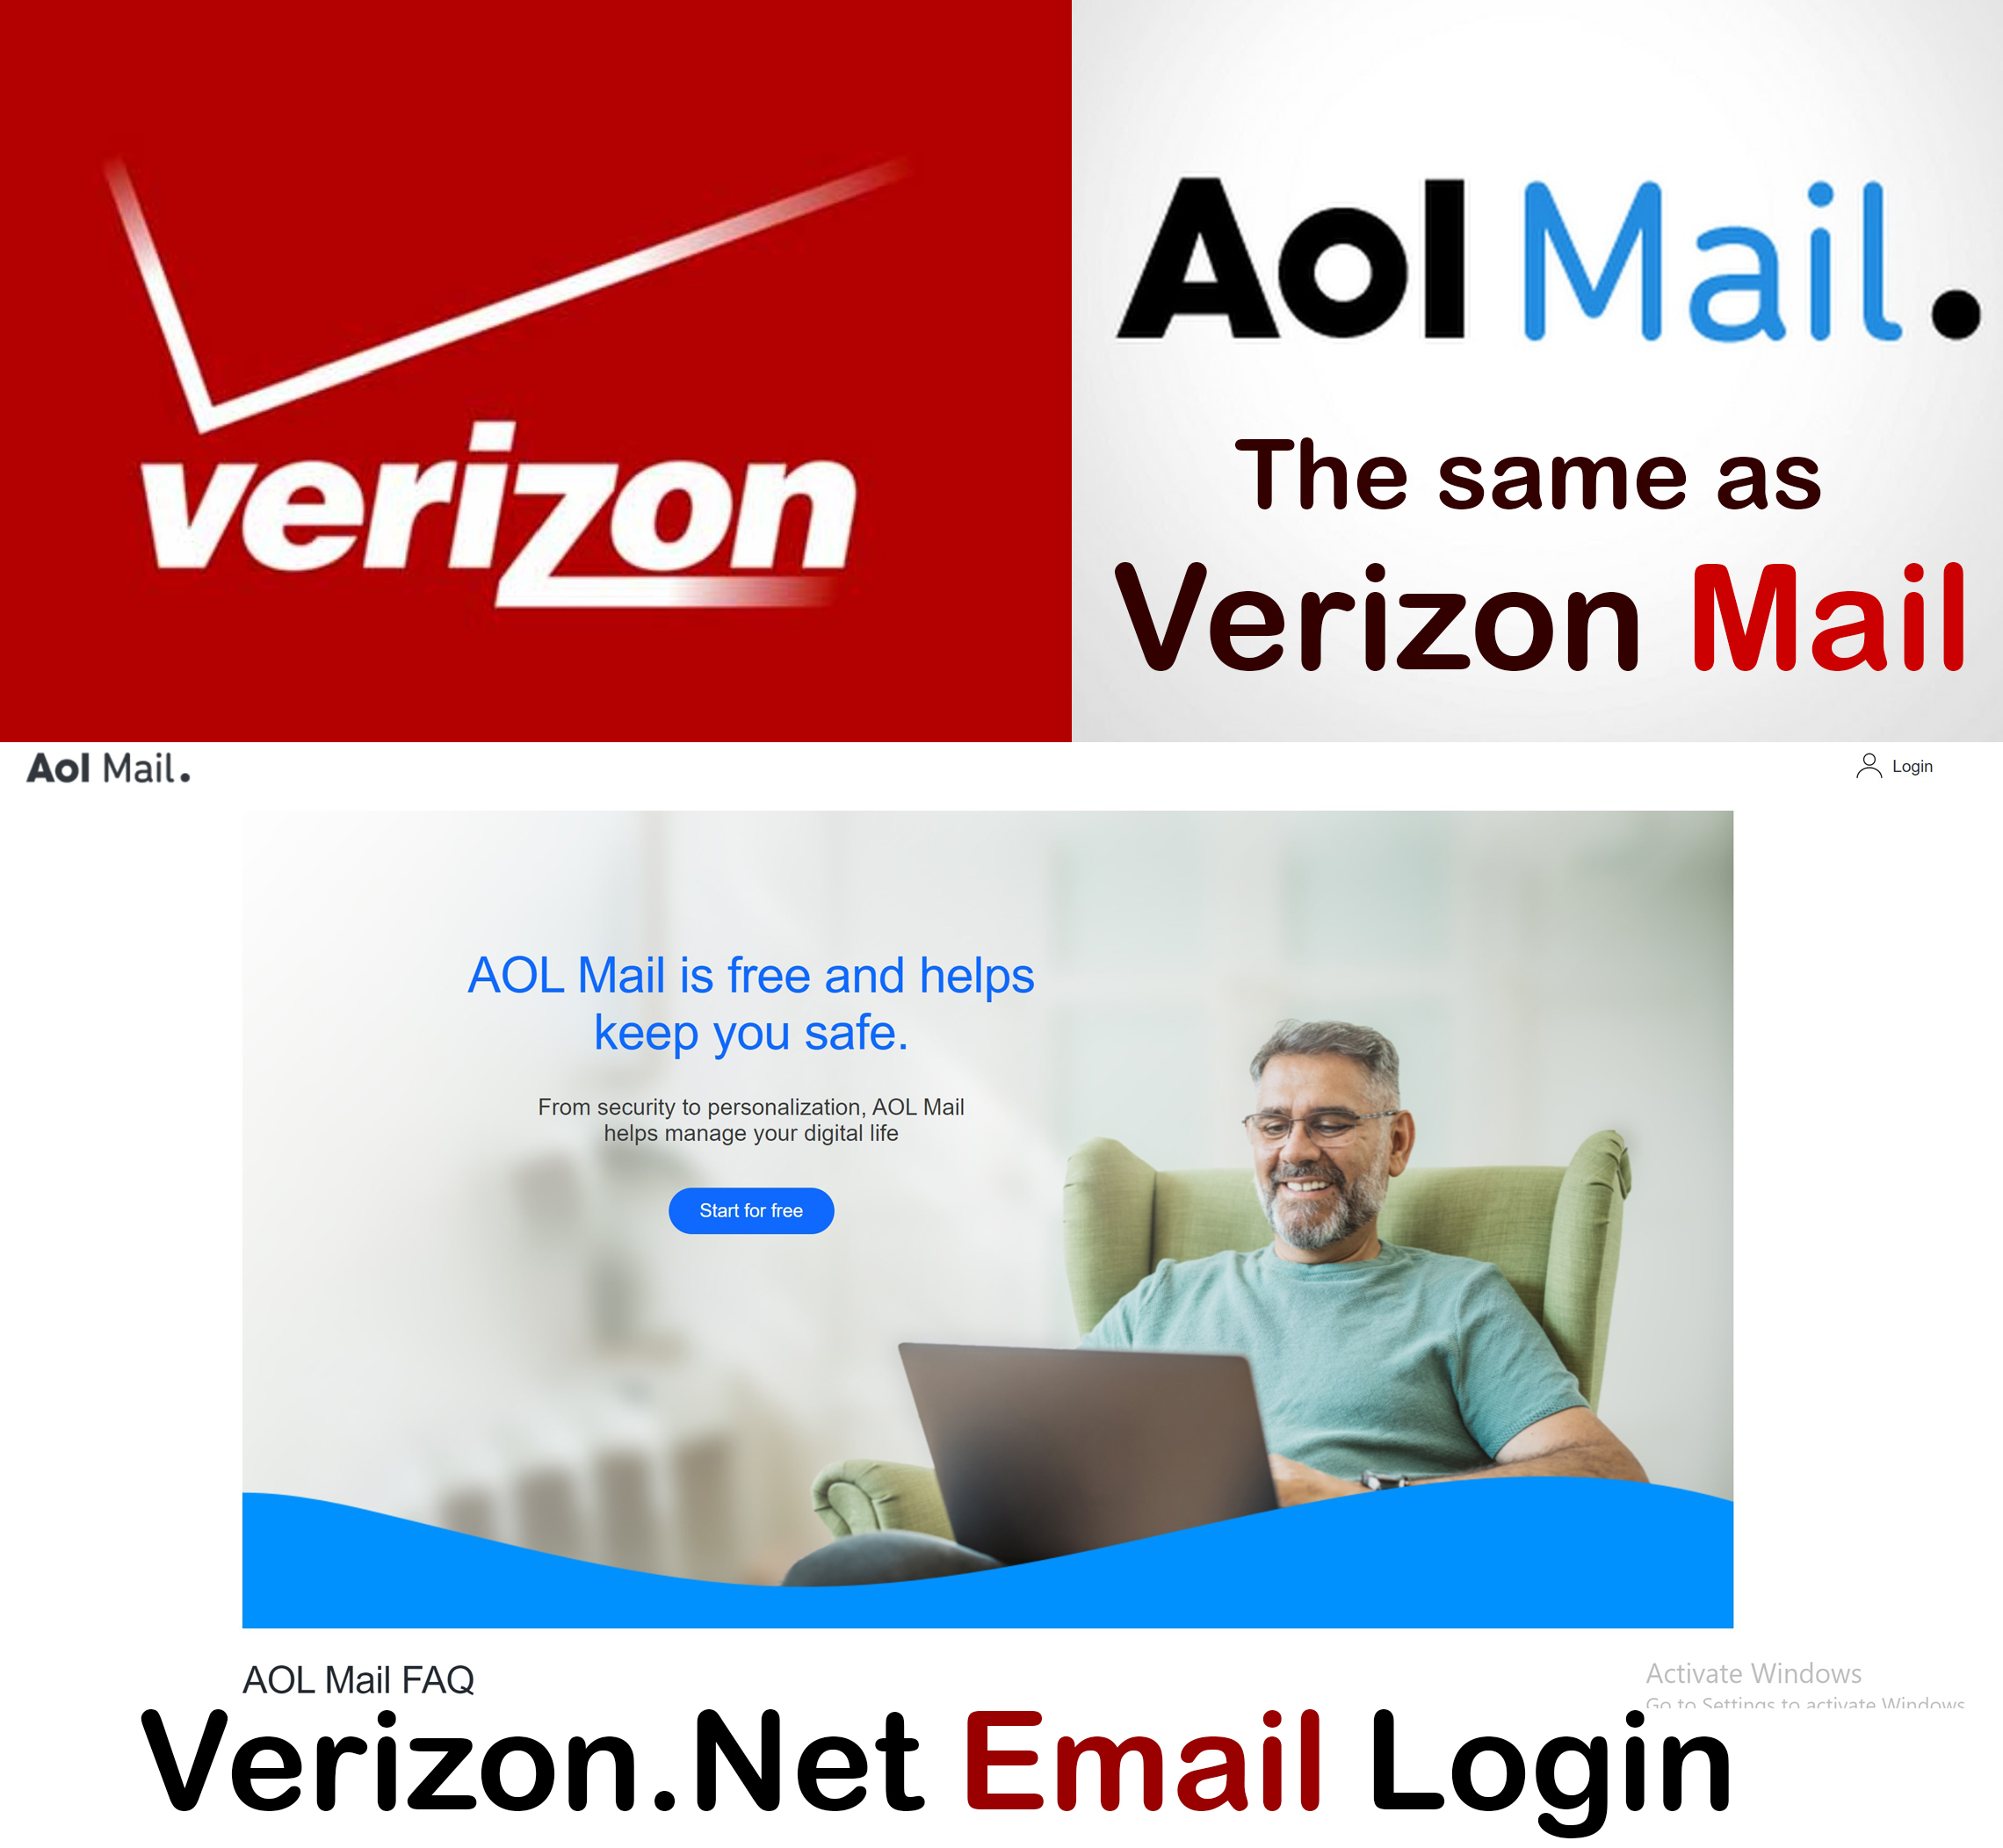 Verizon.Net Email Login